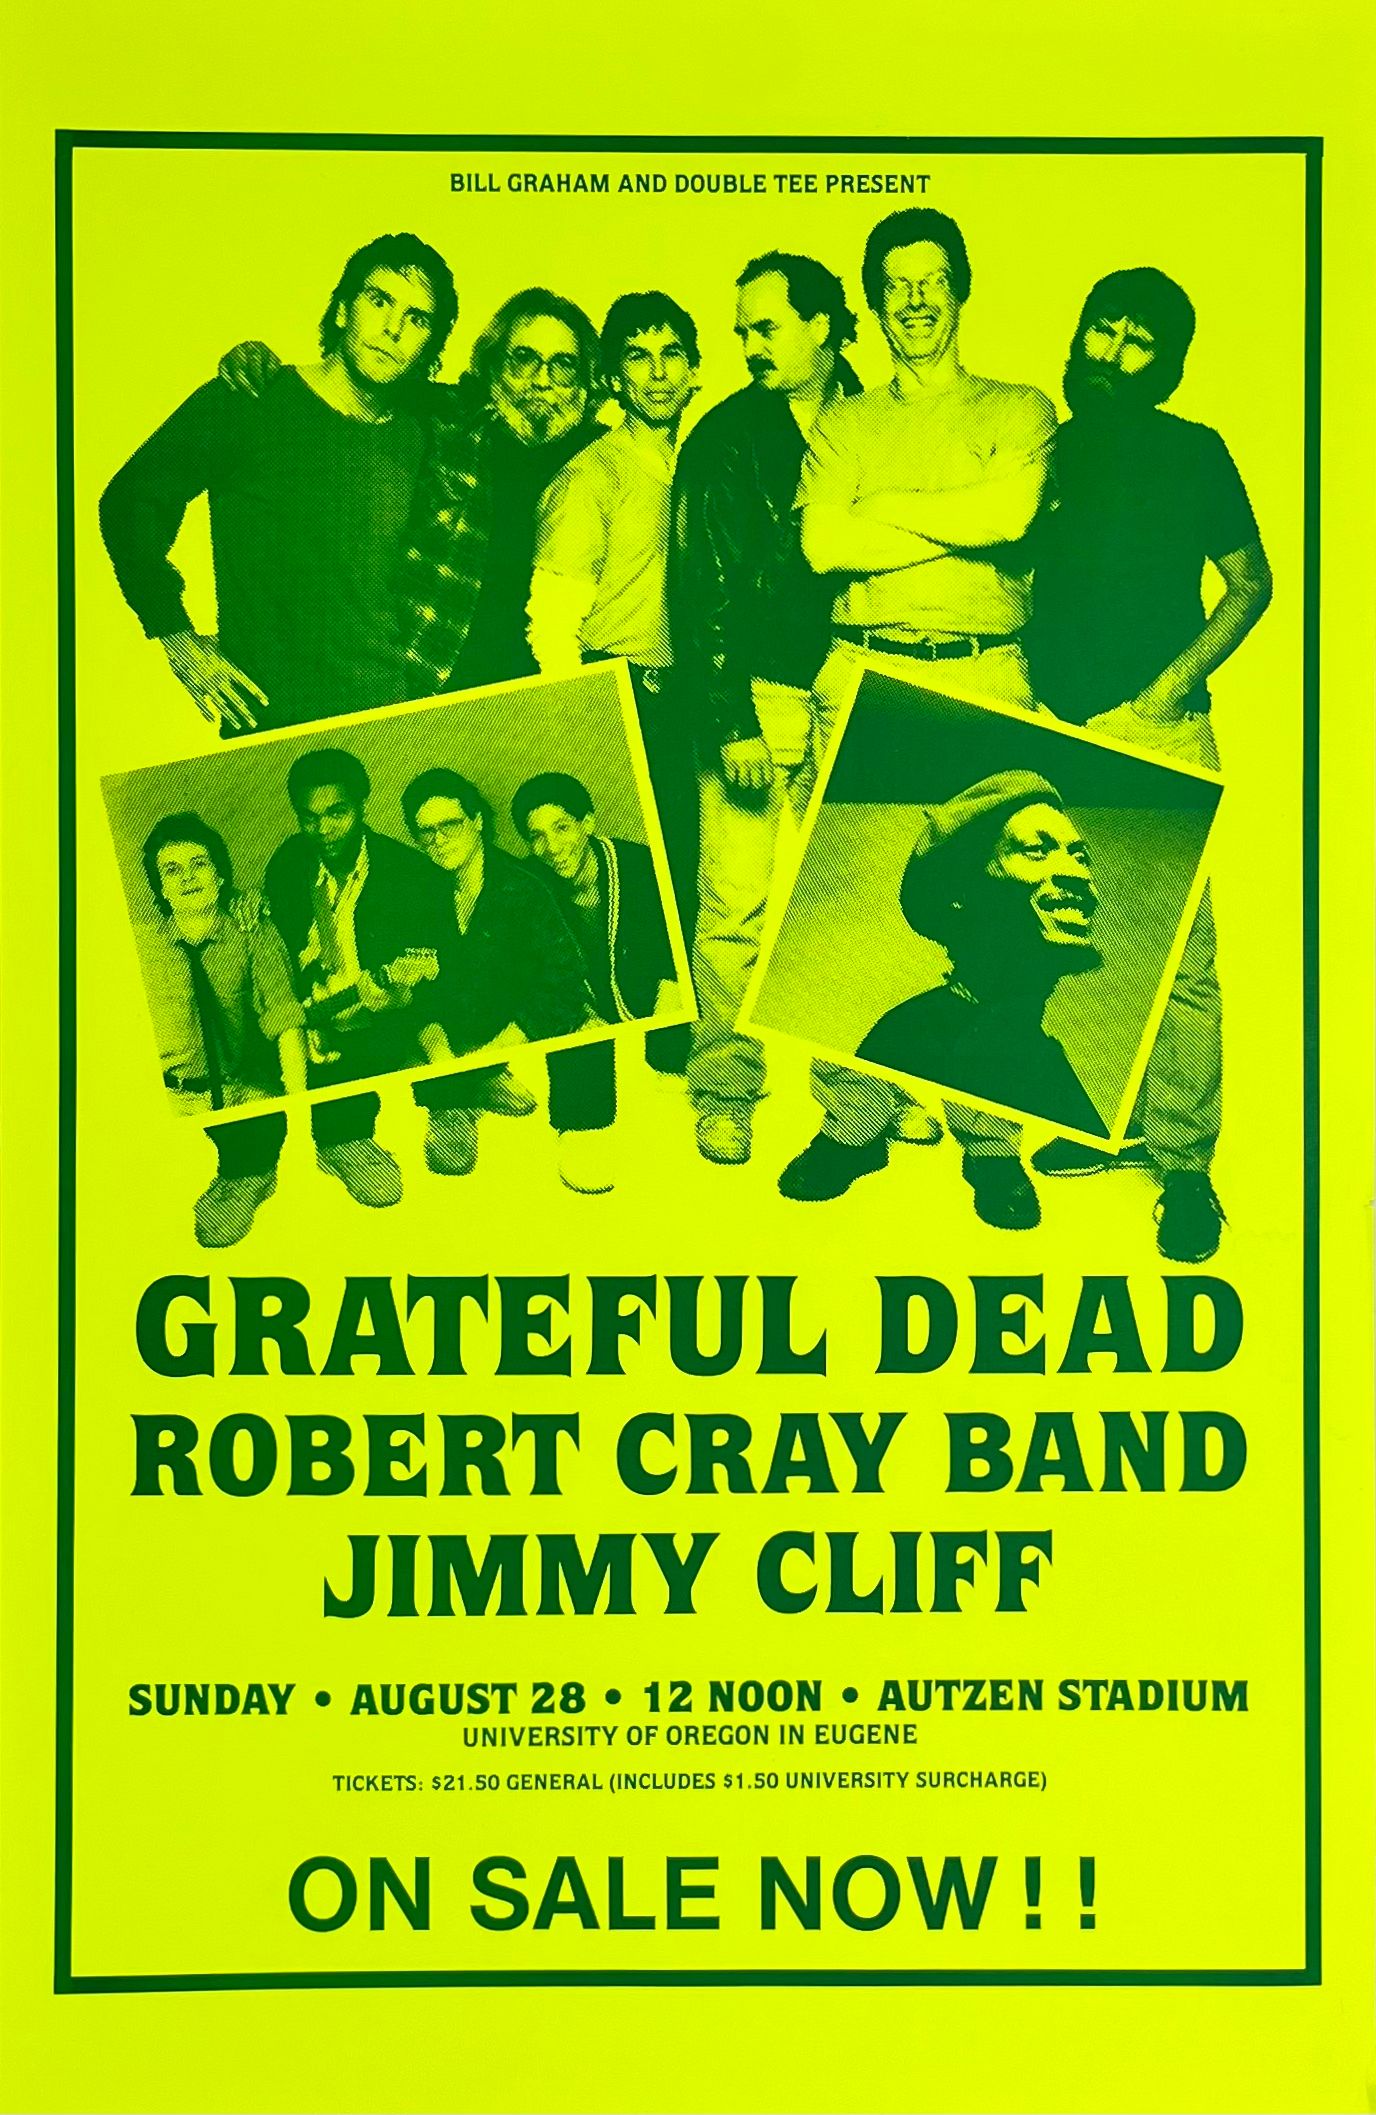 Grateful Dead Autzen Stadium 1988 Concert Poster